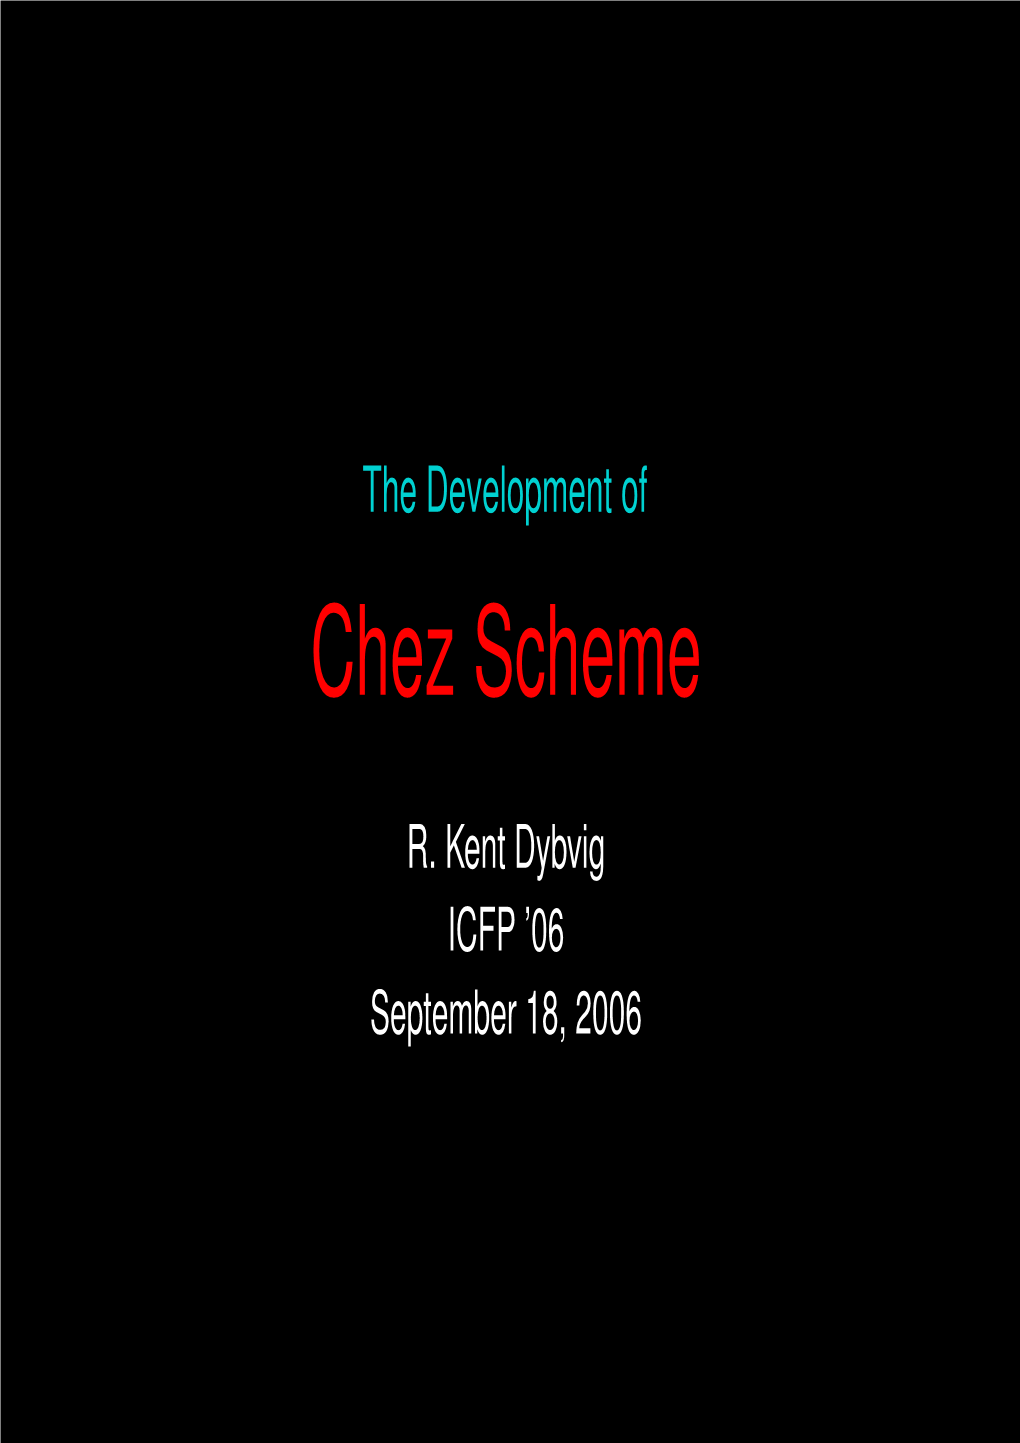 The Development of Chez Scheme